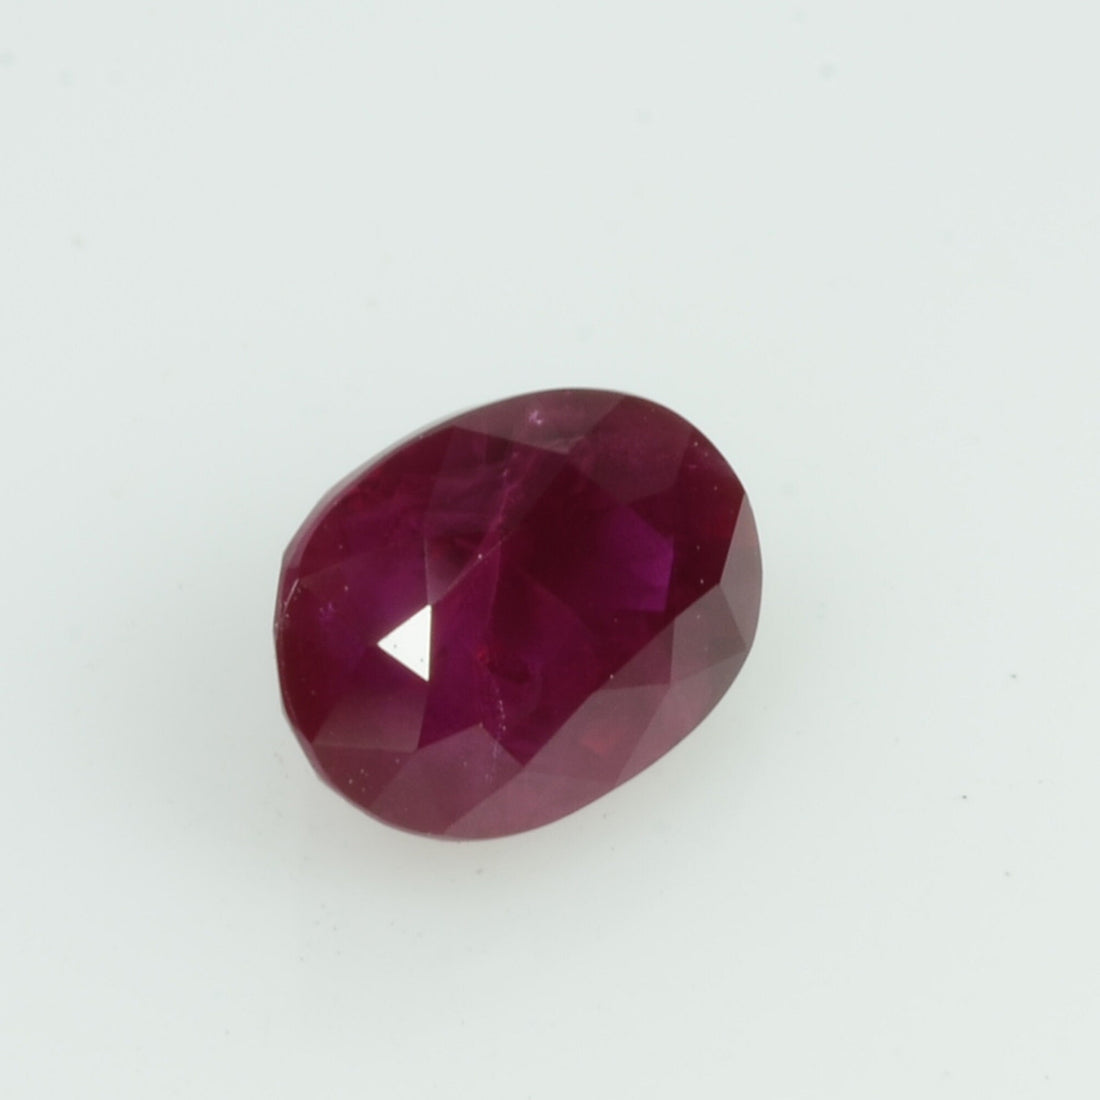 0.92 Cts Natural Burma Ruby Loose Gemstone Oval Cut